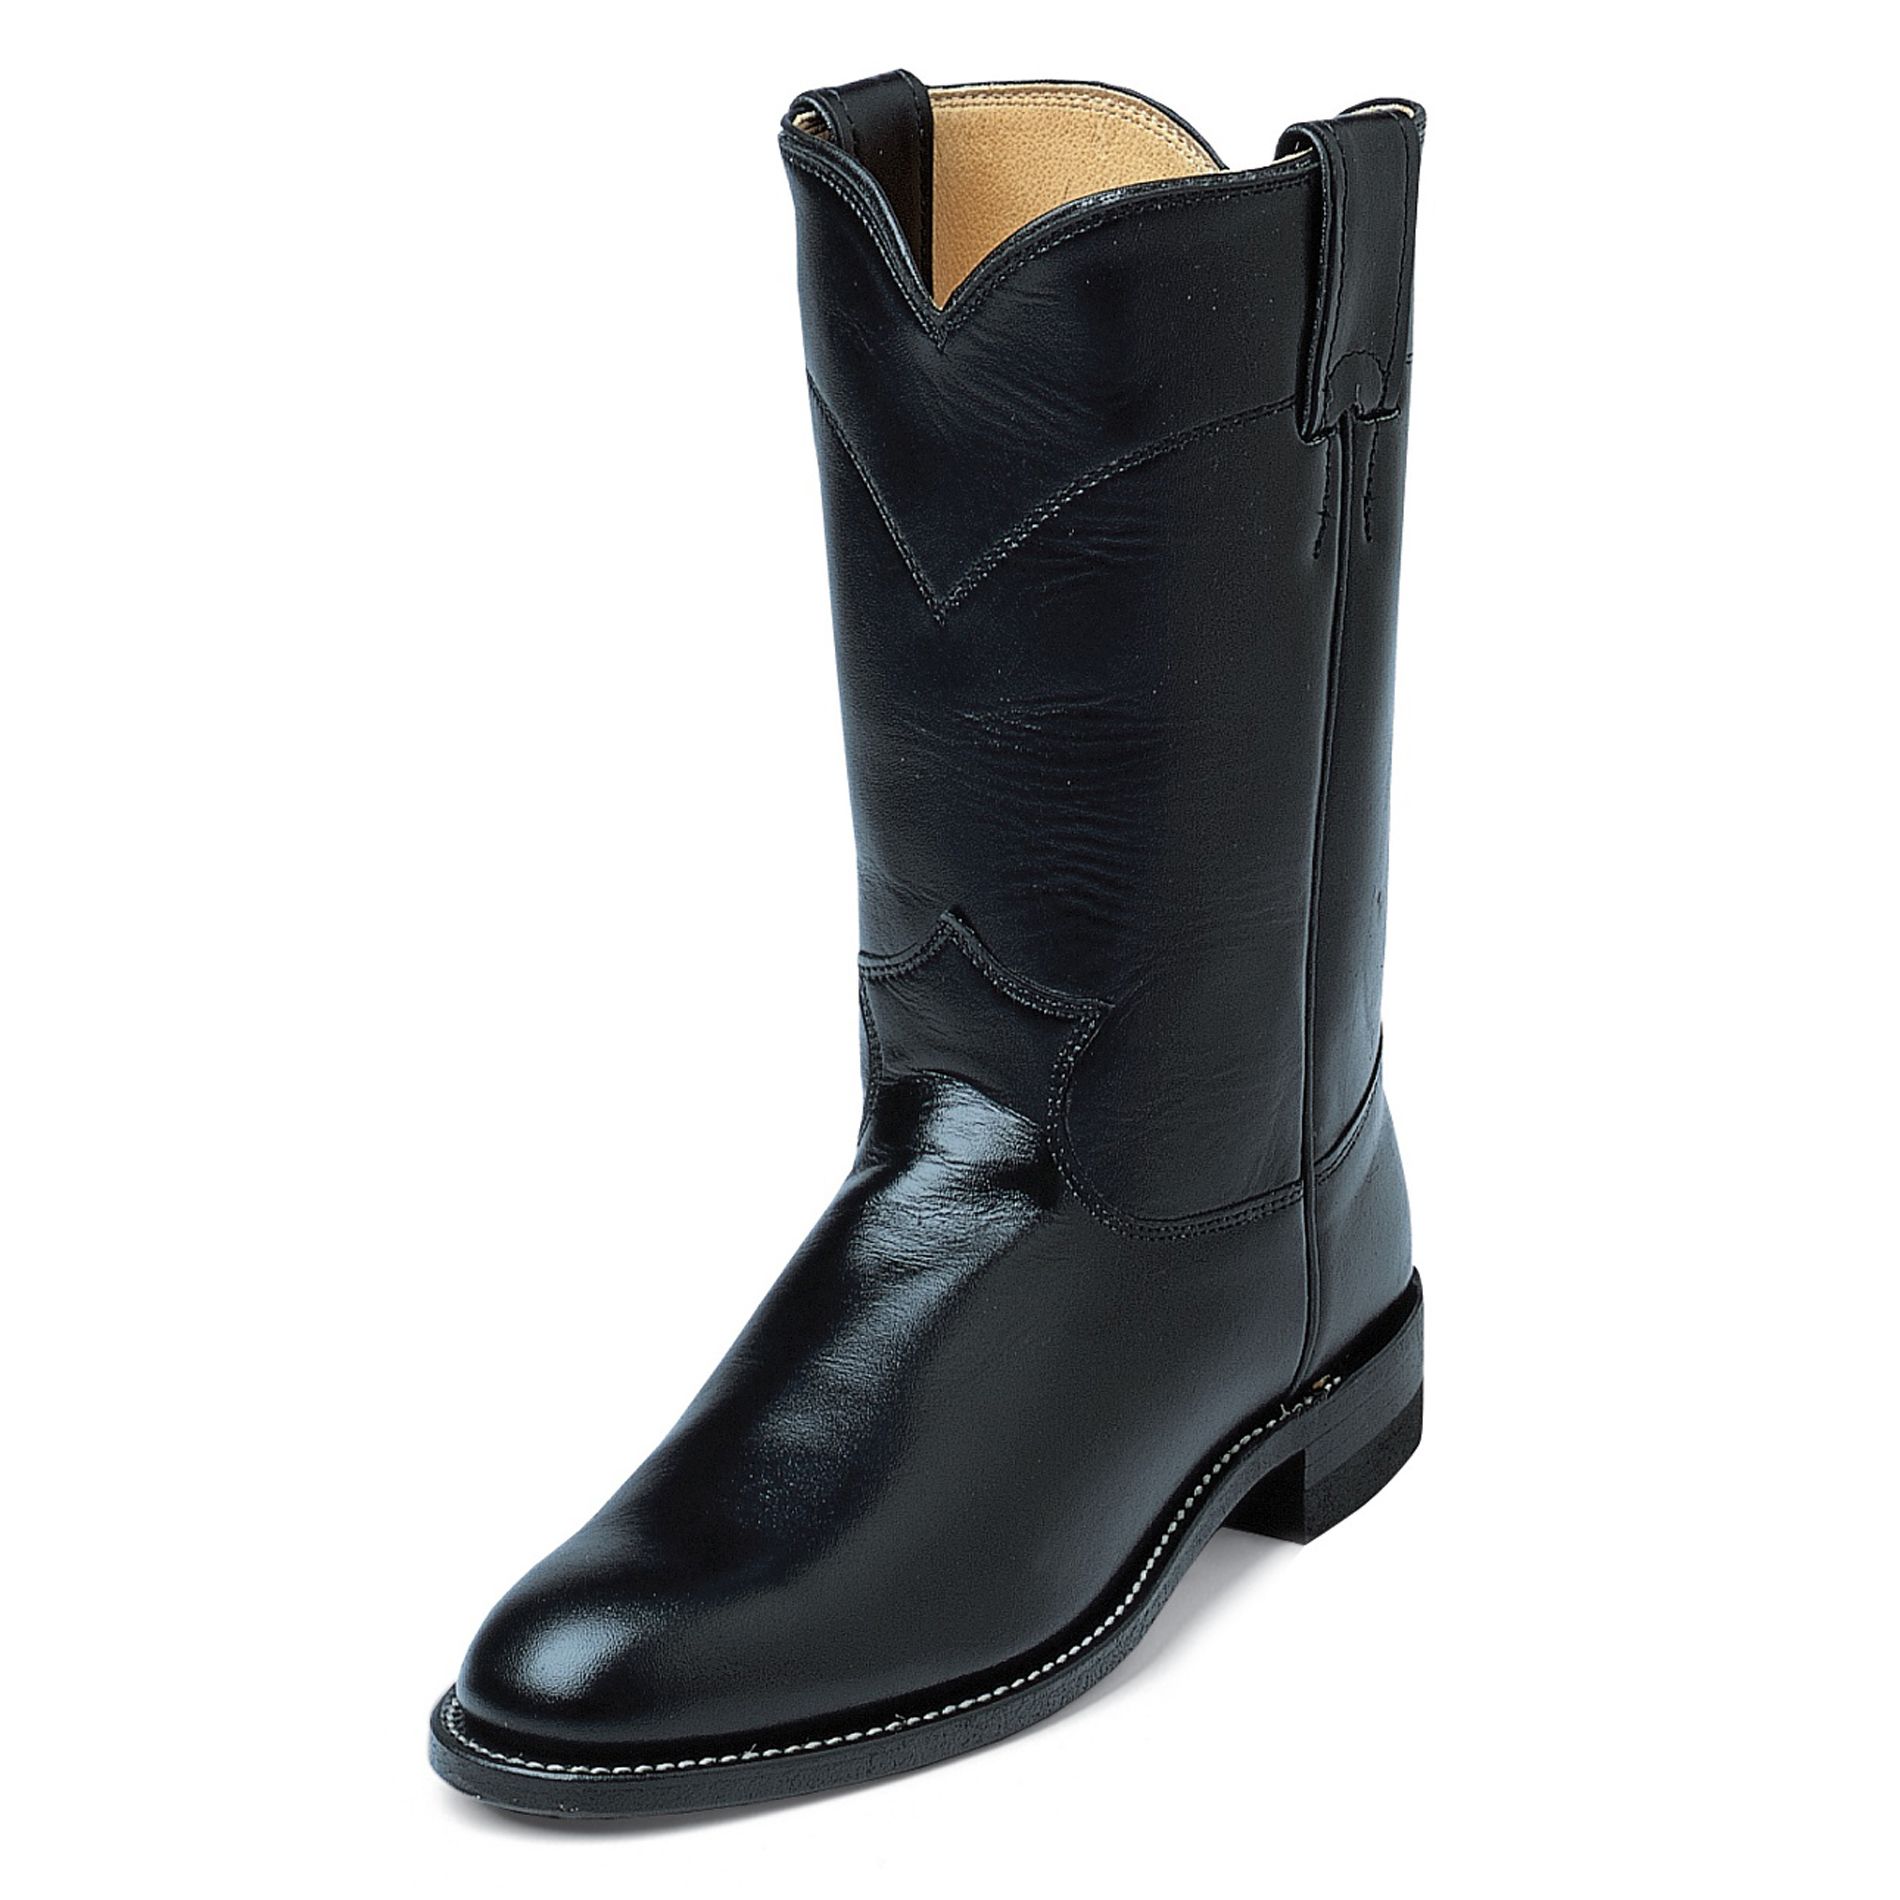 Women's Boots Western Roper Kipskin Leather Black L3703 Narrow Avail